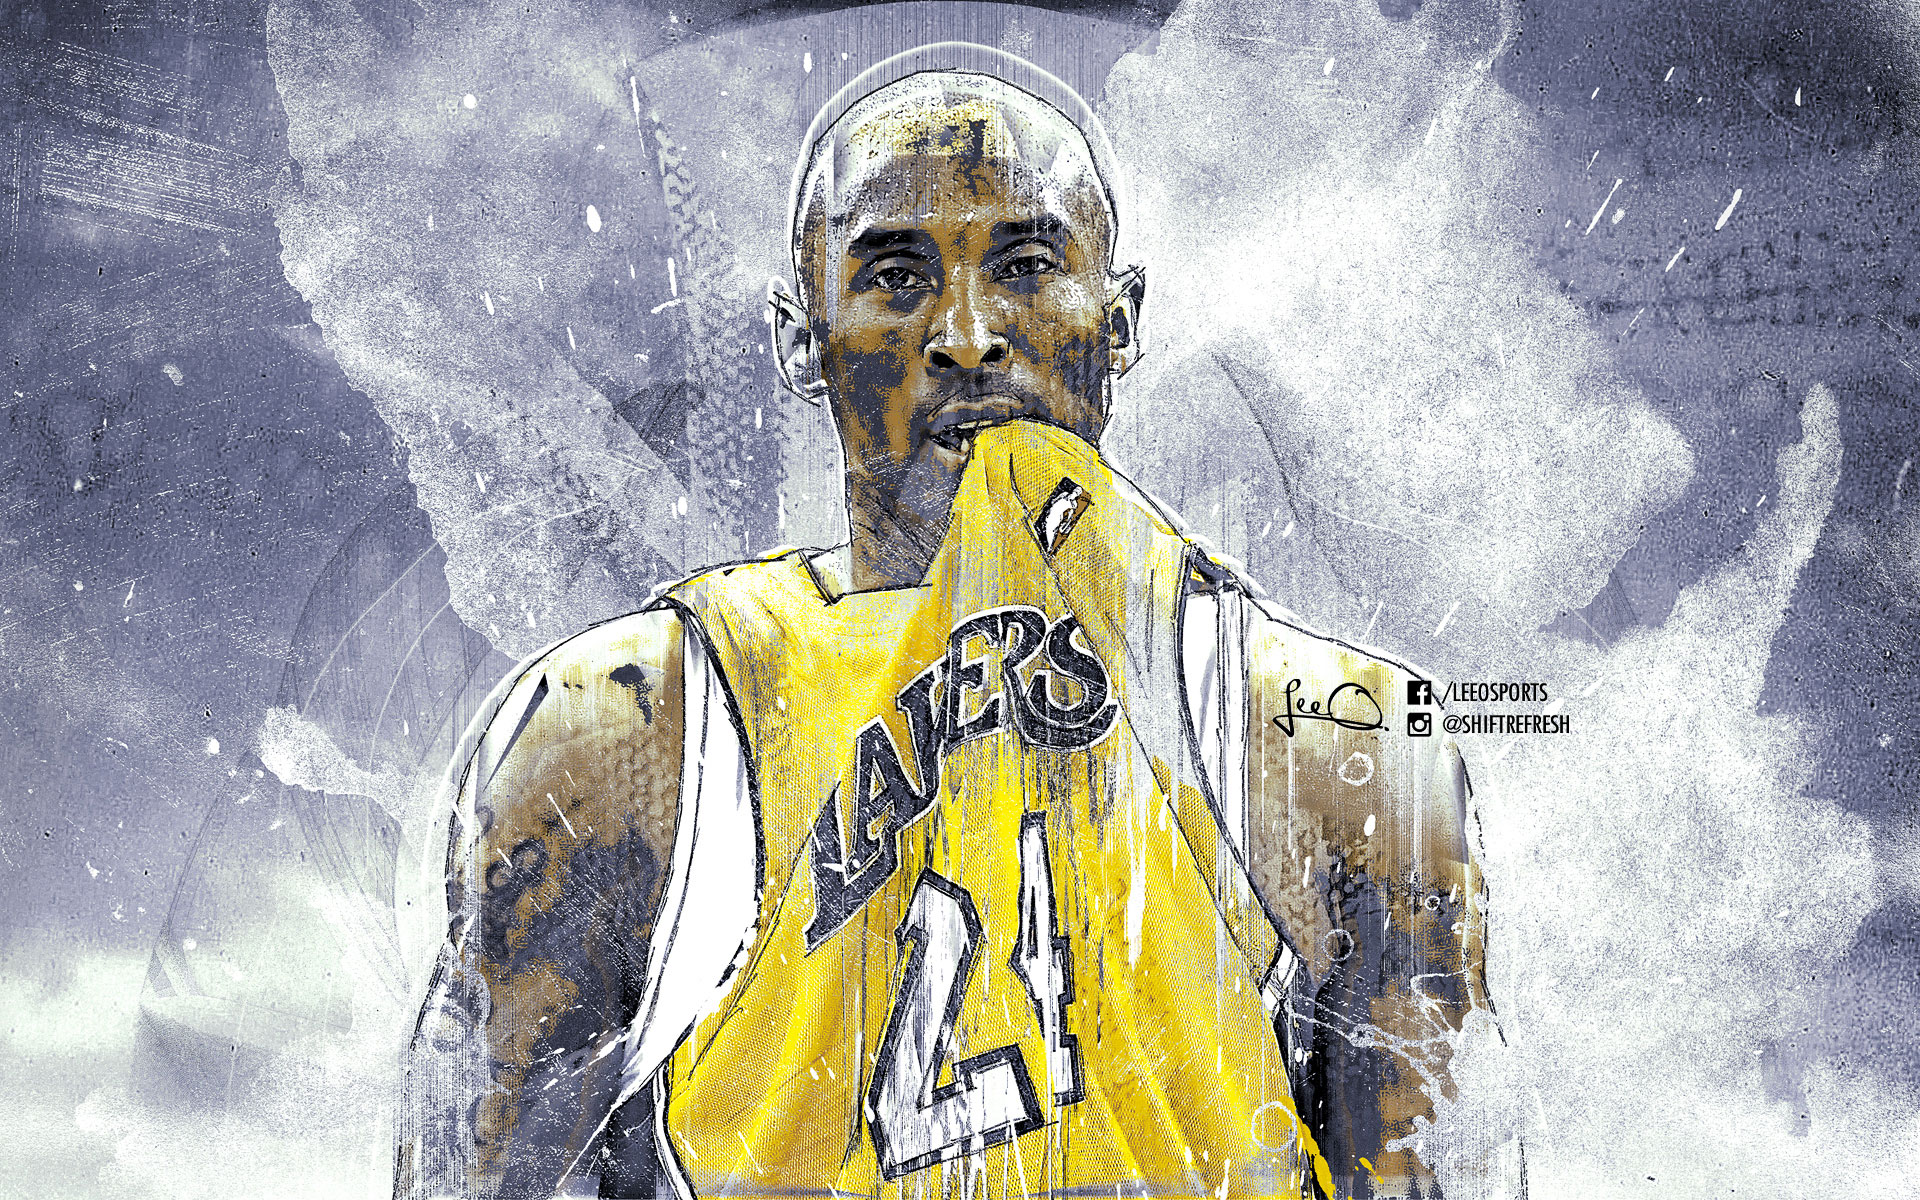 Kobe Bryant Wallpaper